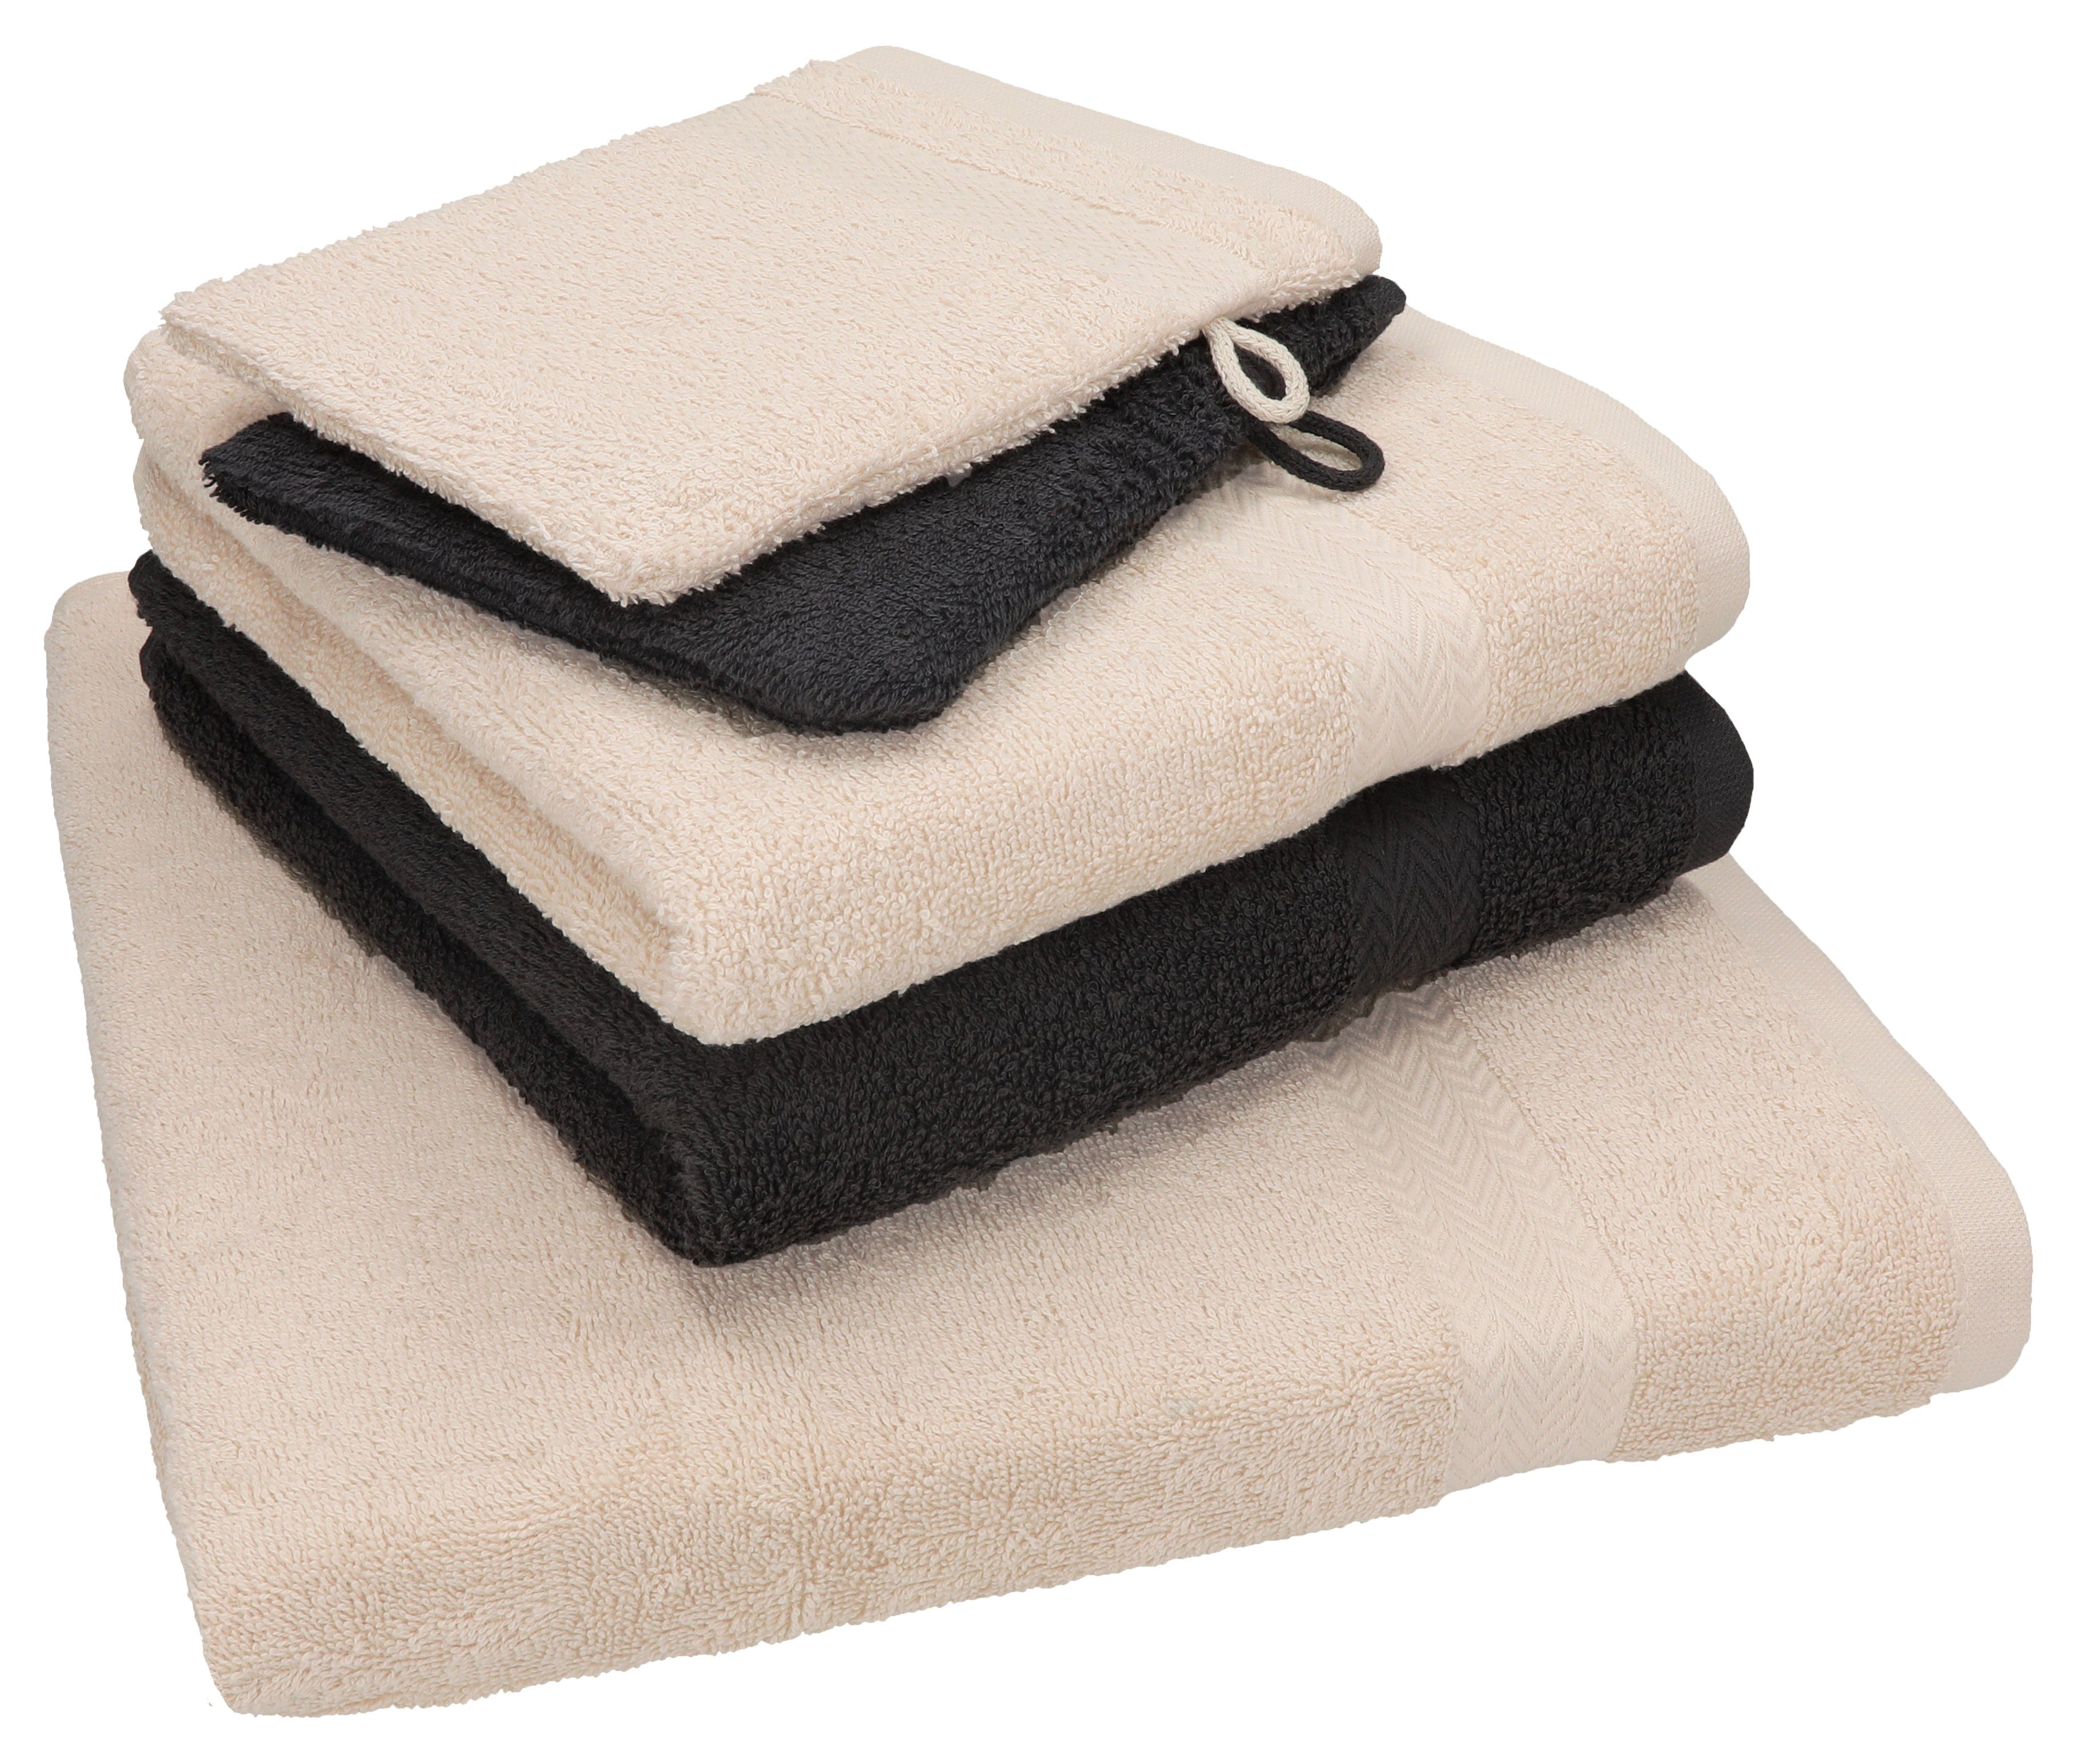 Set 2 Set Handtuch 100% 5 Betz Baumwolle Single sand-graphit Pack 2 Handtücher Baumwolle TLG. grau Handtuch Duschtuch 100% Waschhandschuhe, 1